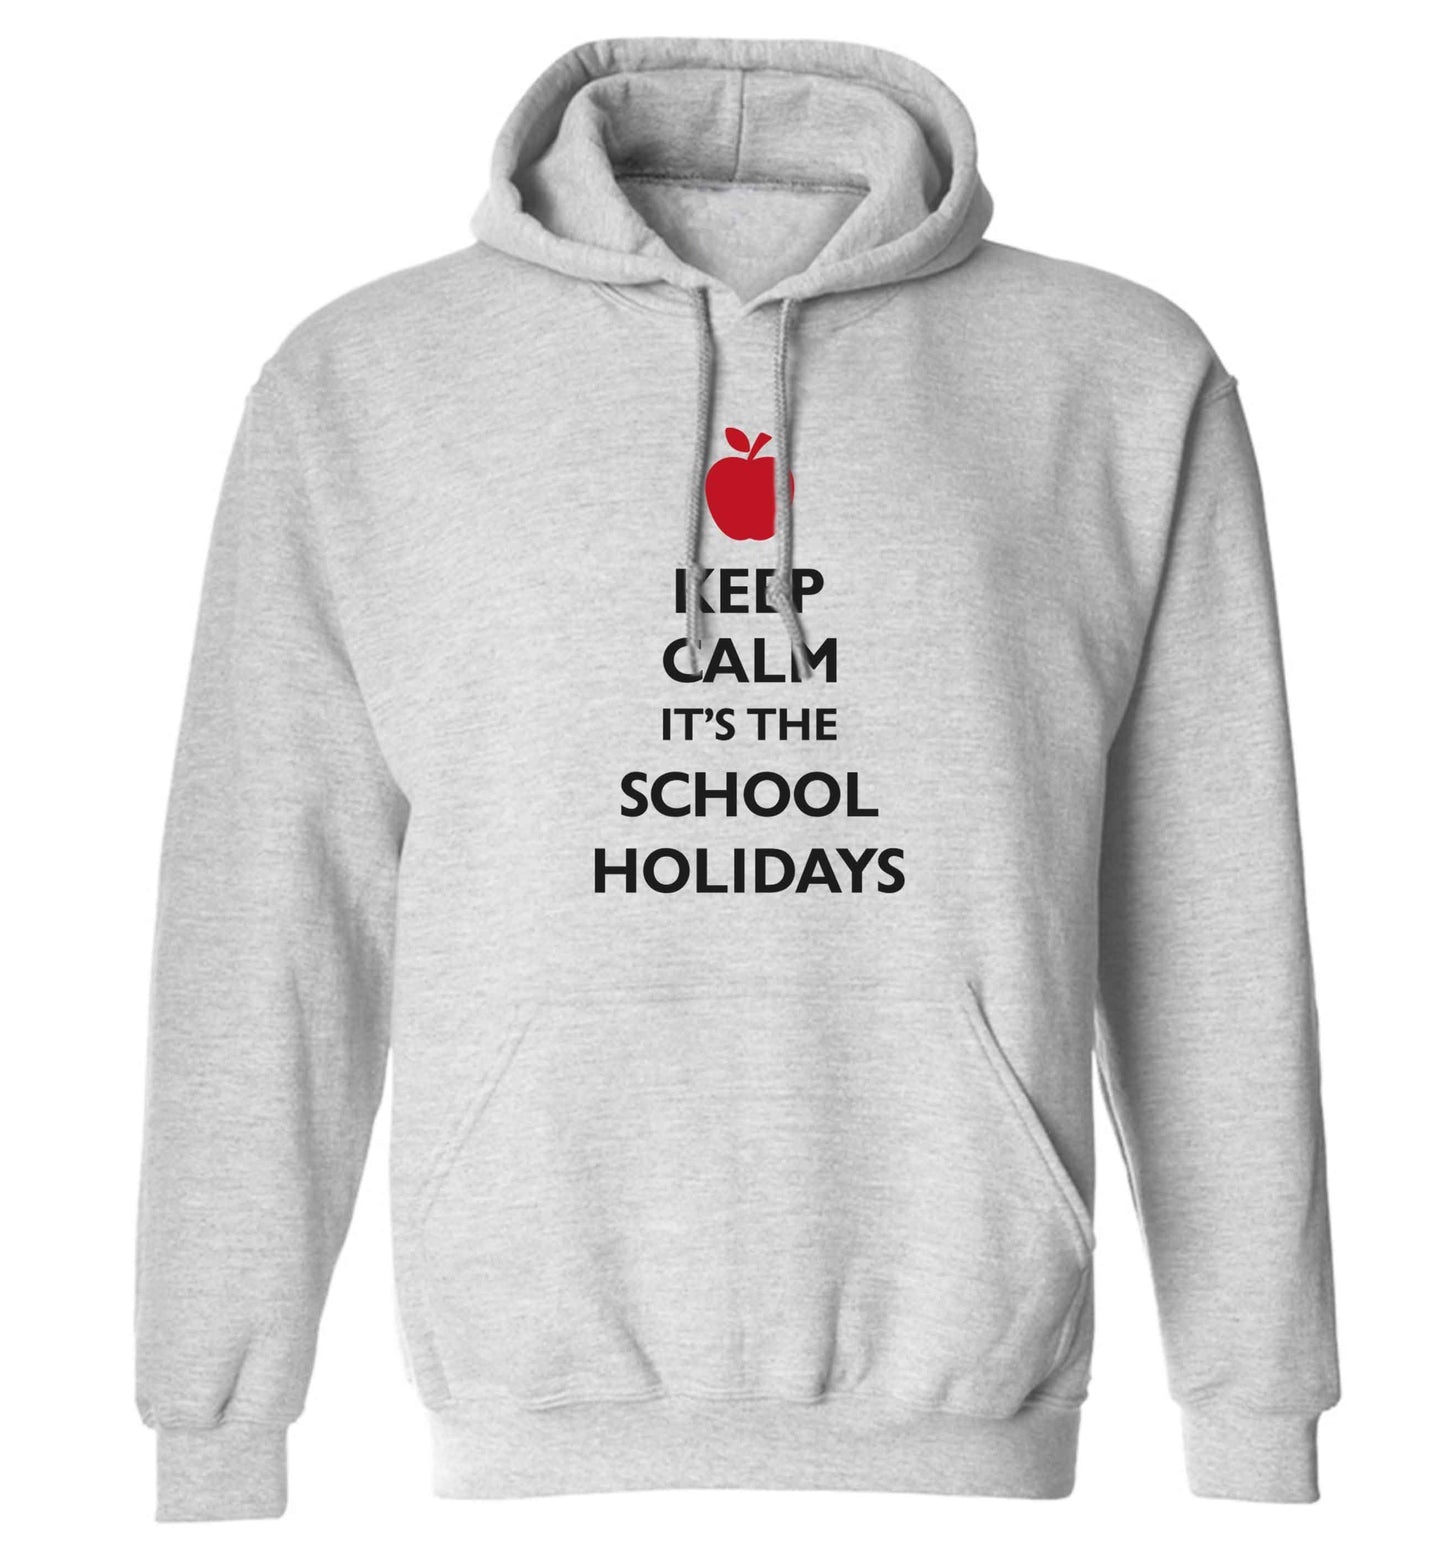 Keep calm it's the school holidays adults unisex grey hoodie 2XL